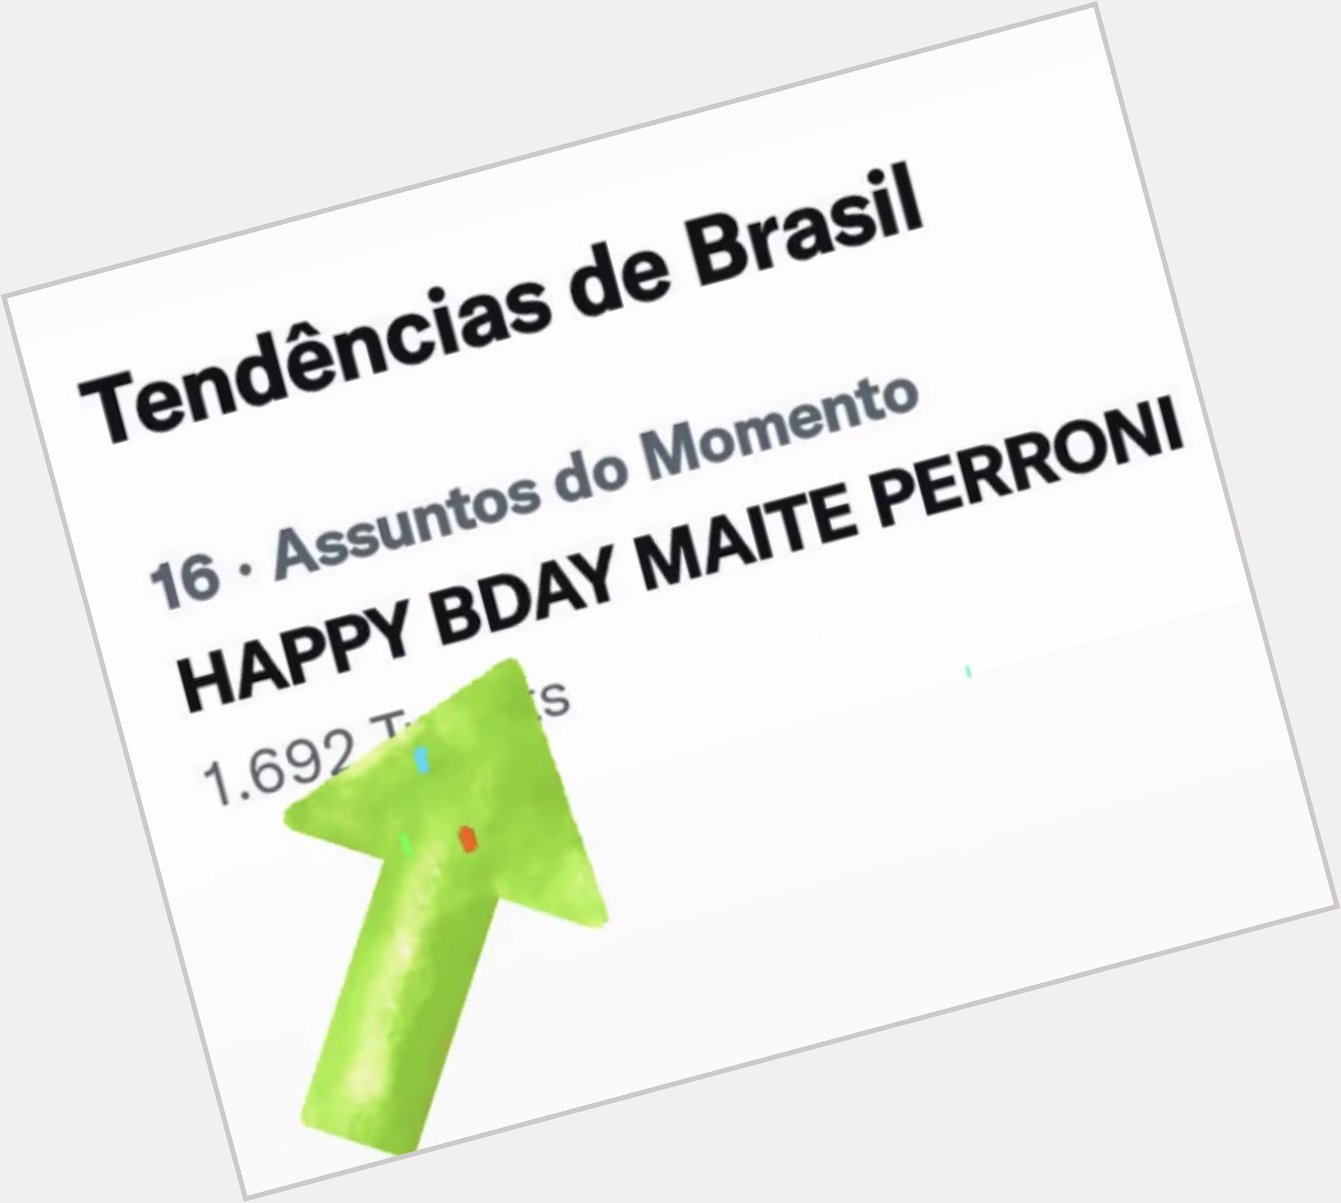 Happy Bday Maite Perroni llego a ser tendencia en Brasil!   